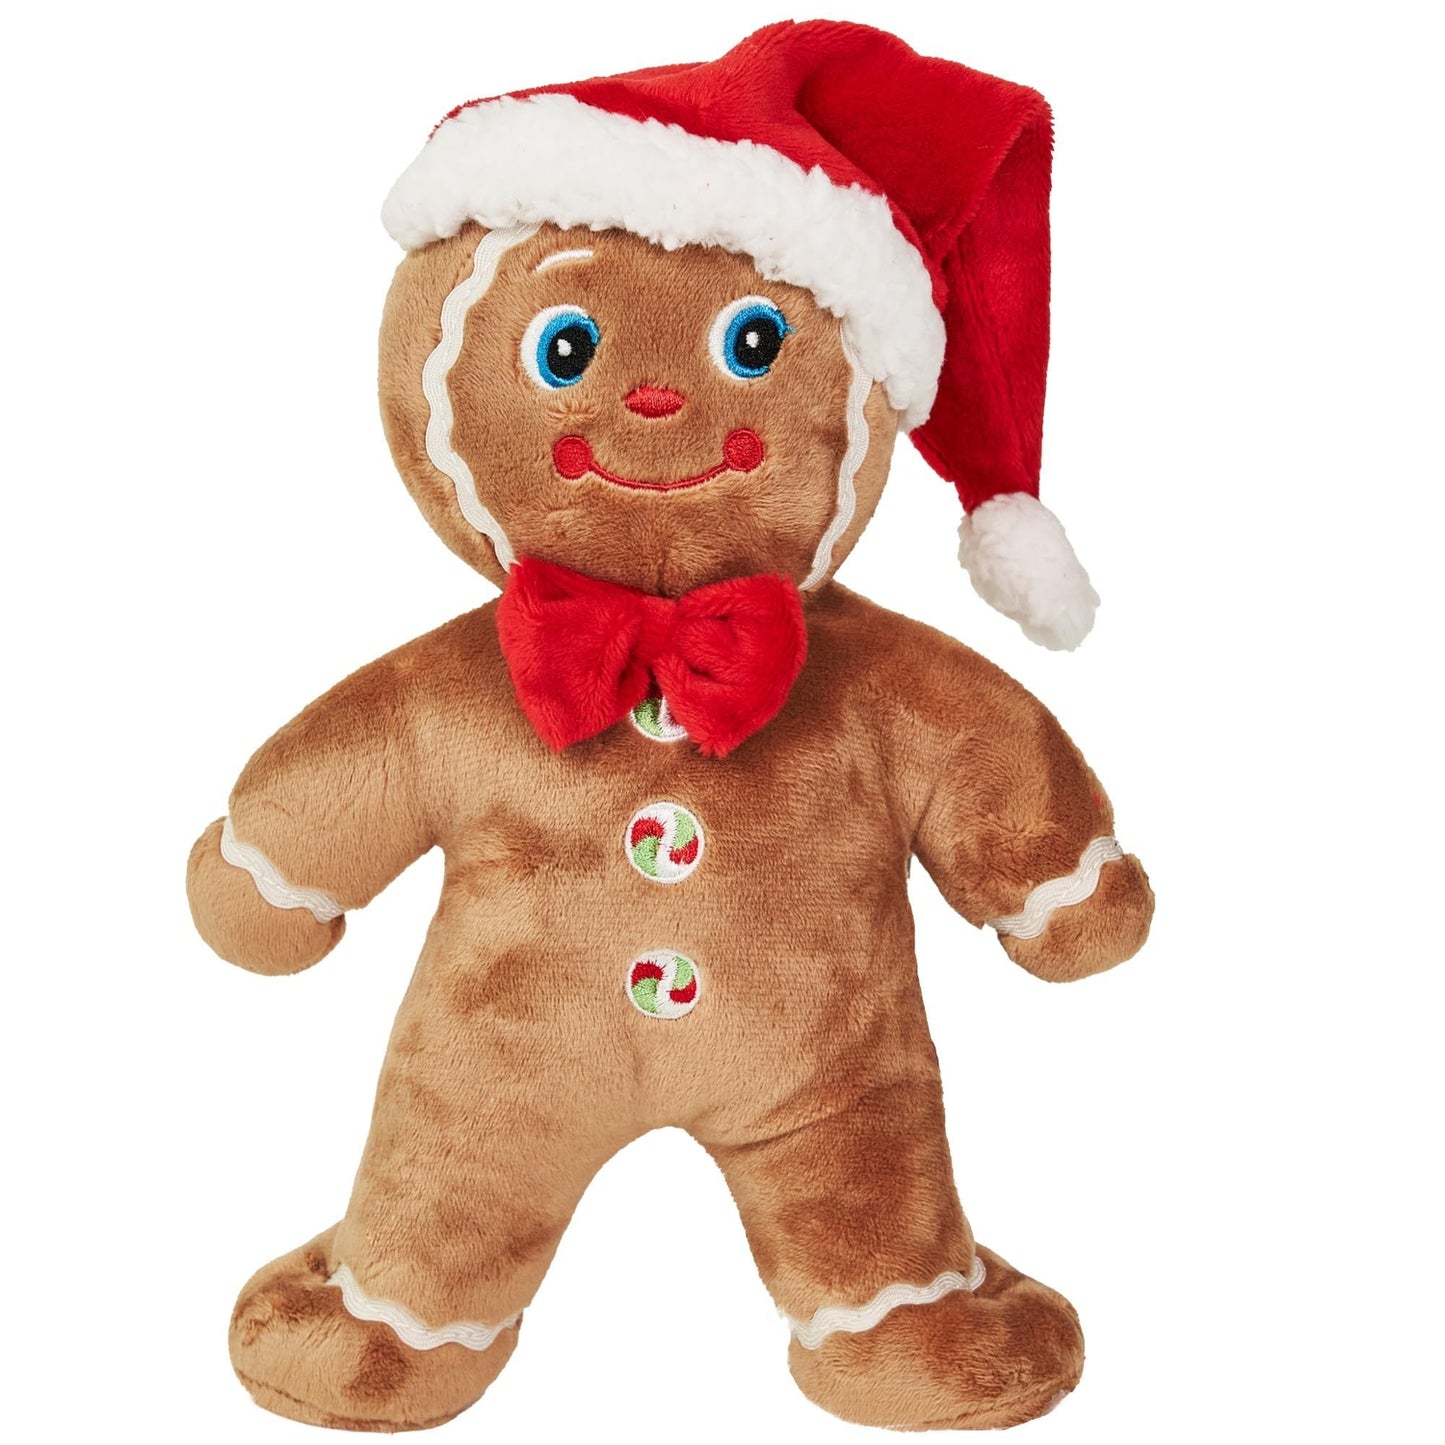 10" Gingerbread Man, Jolly